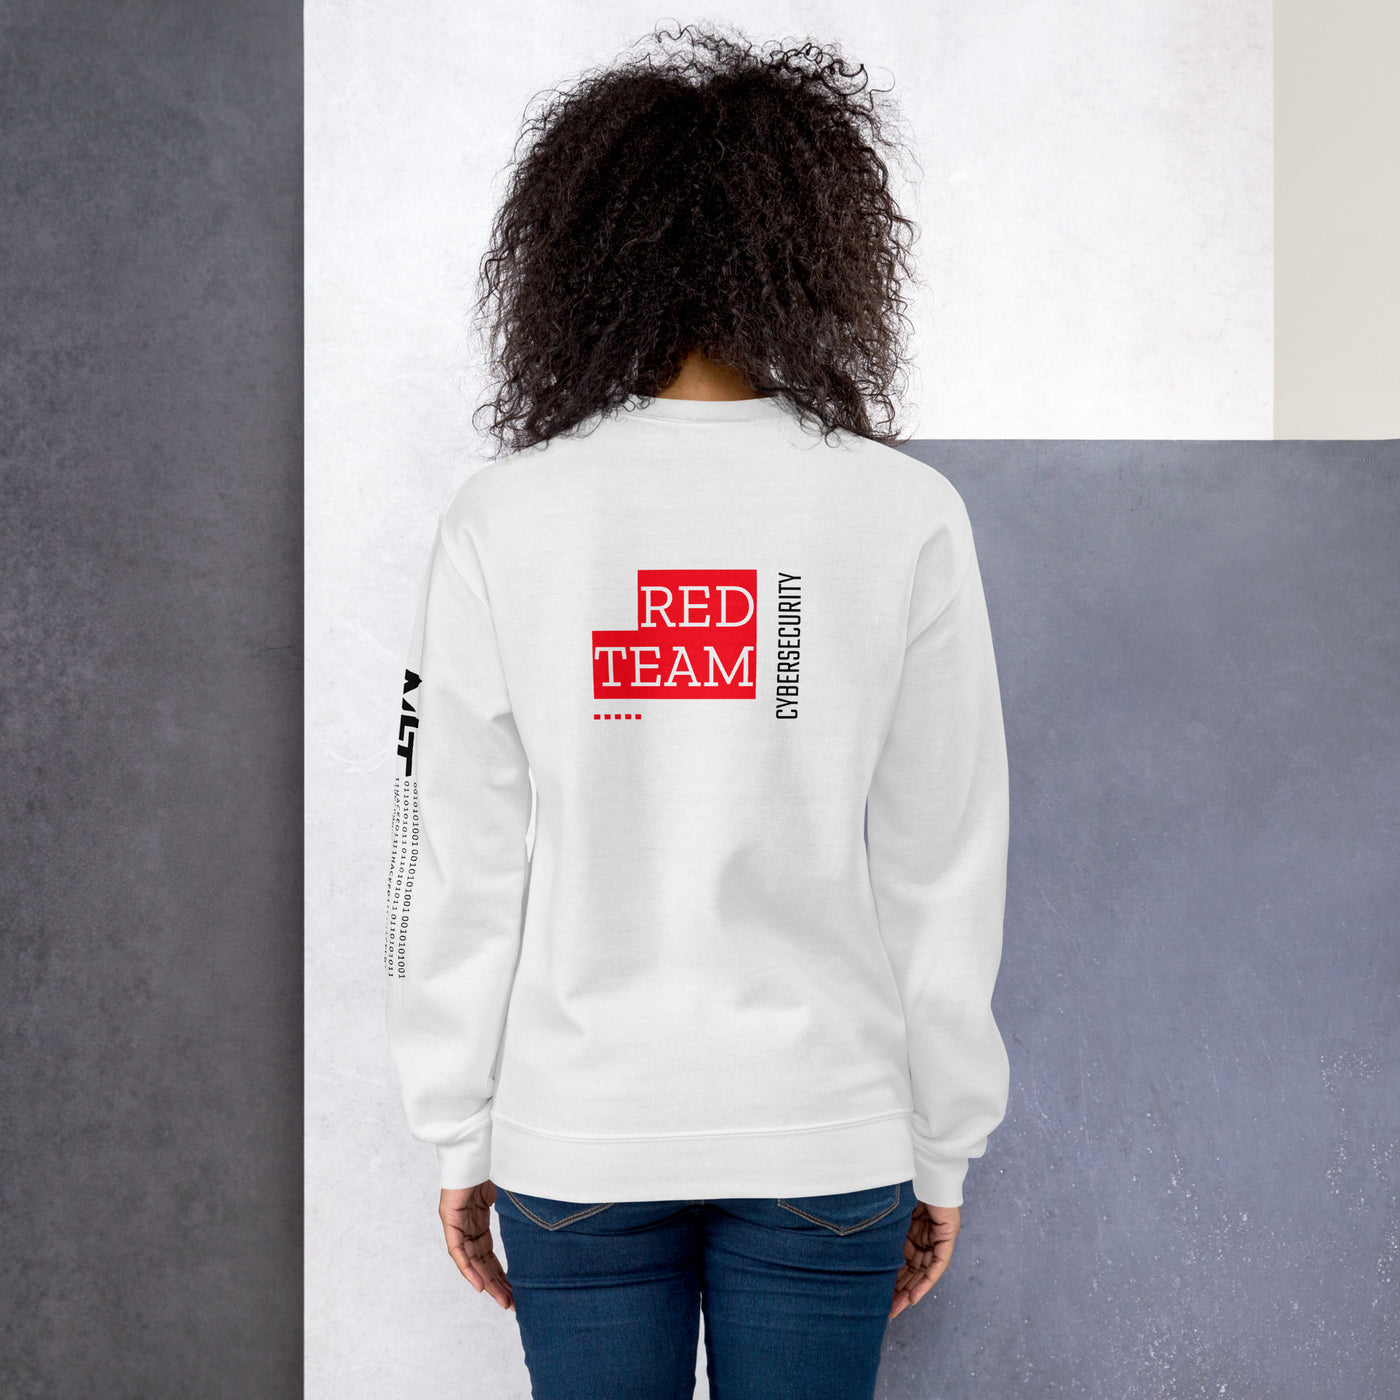 Cyber Security Red Team V13 - Unisex Sweatshirt ( Back Print )